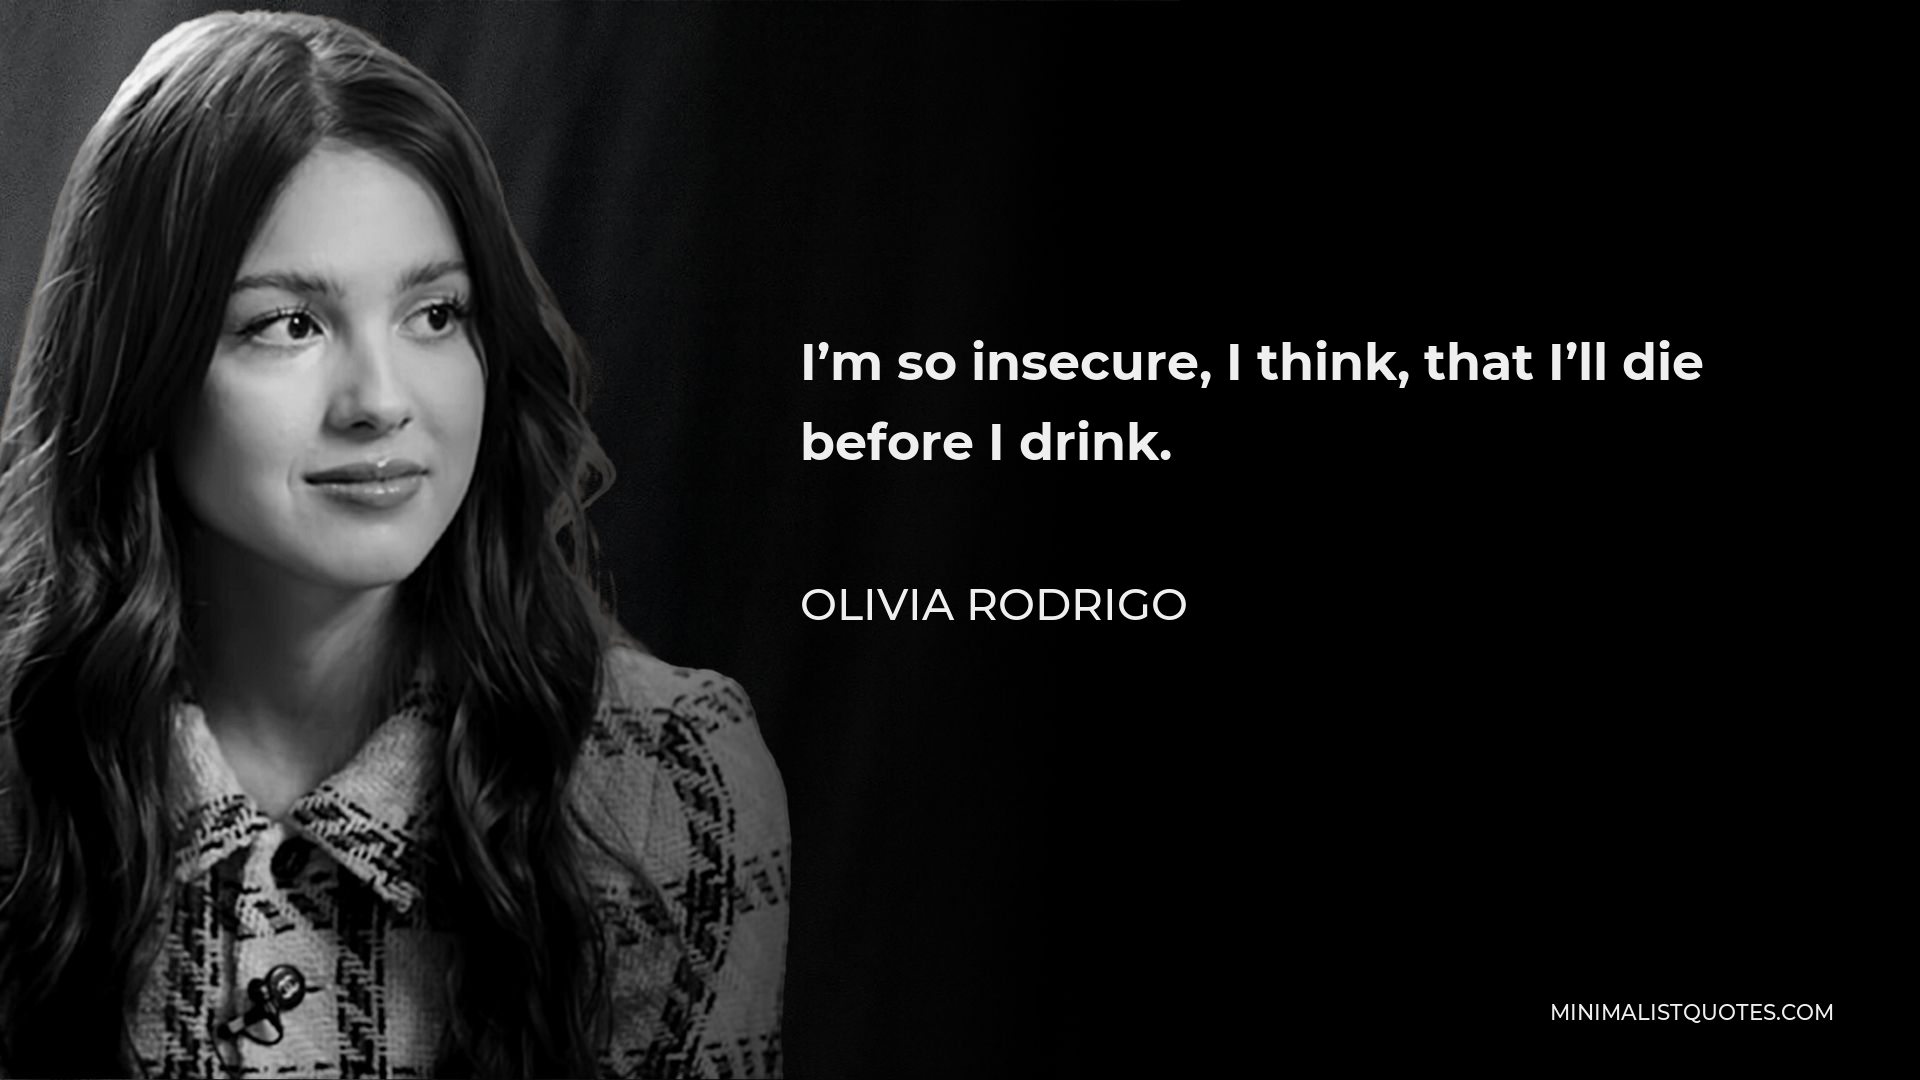 Olivia Rodrigo Quote - I’m so insecure, I think, that I’ll die before I drink.